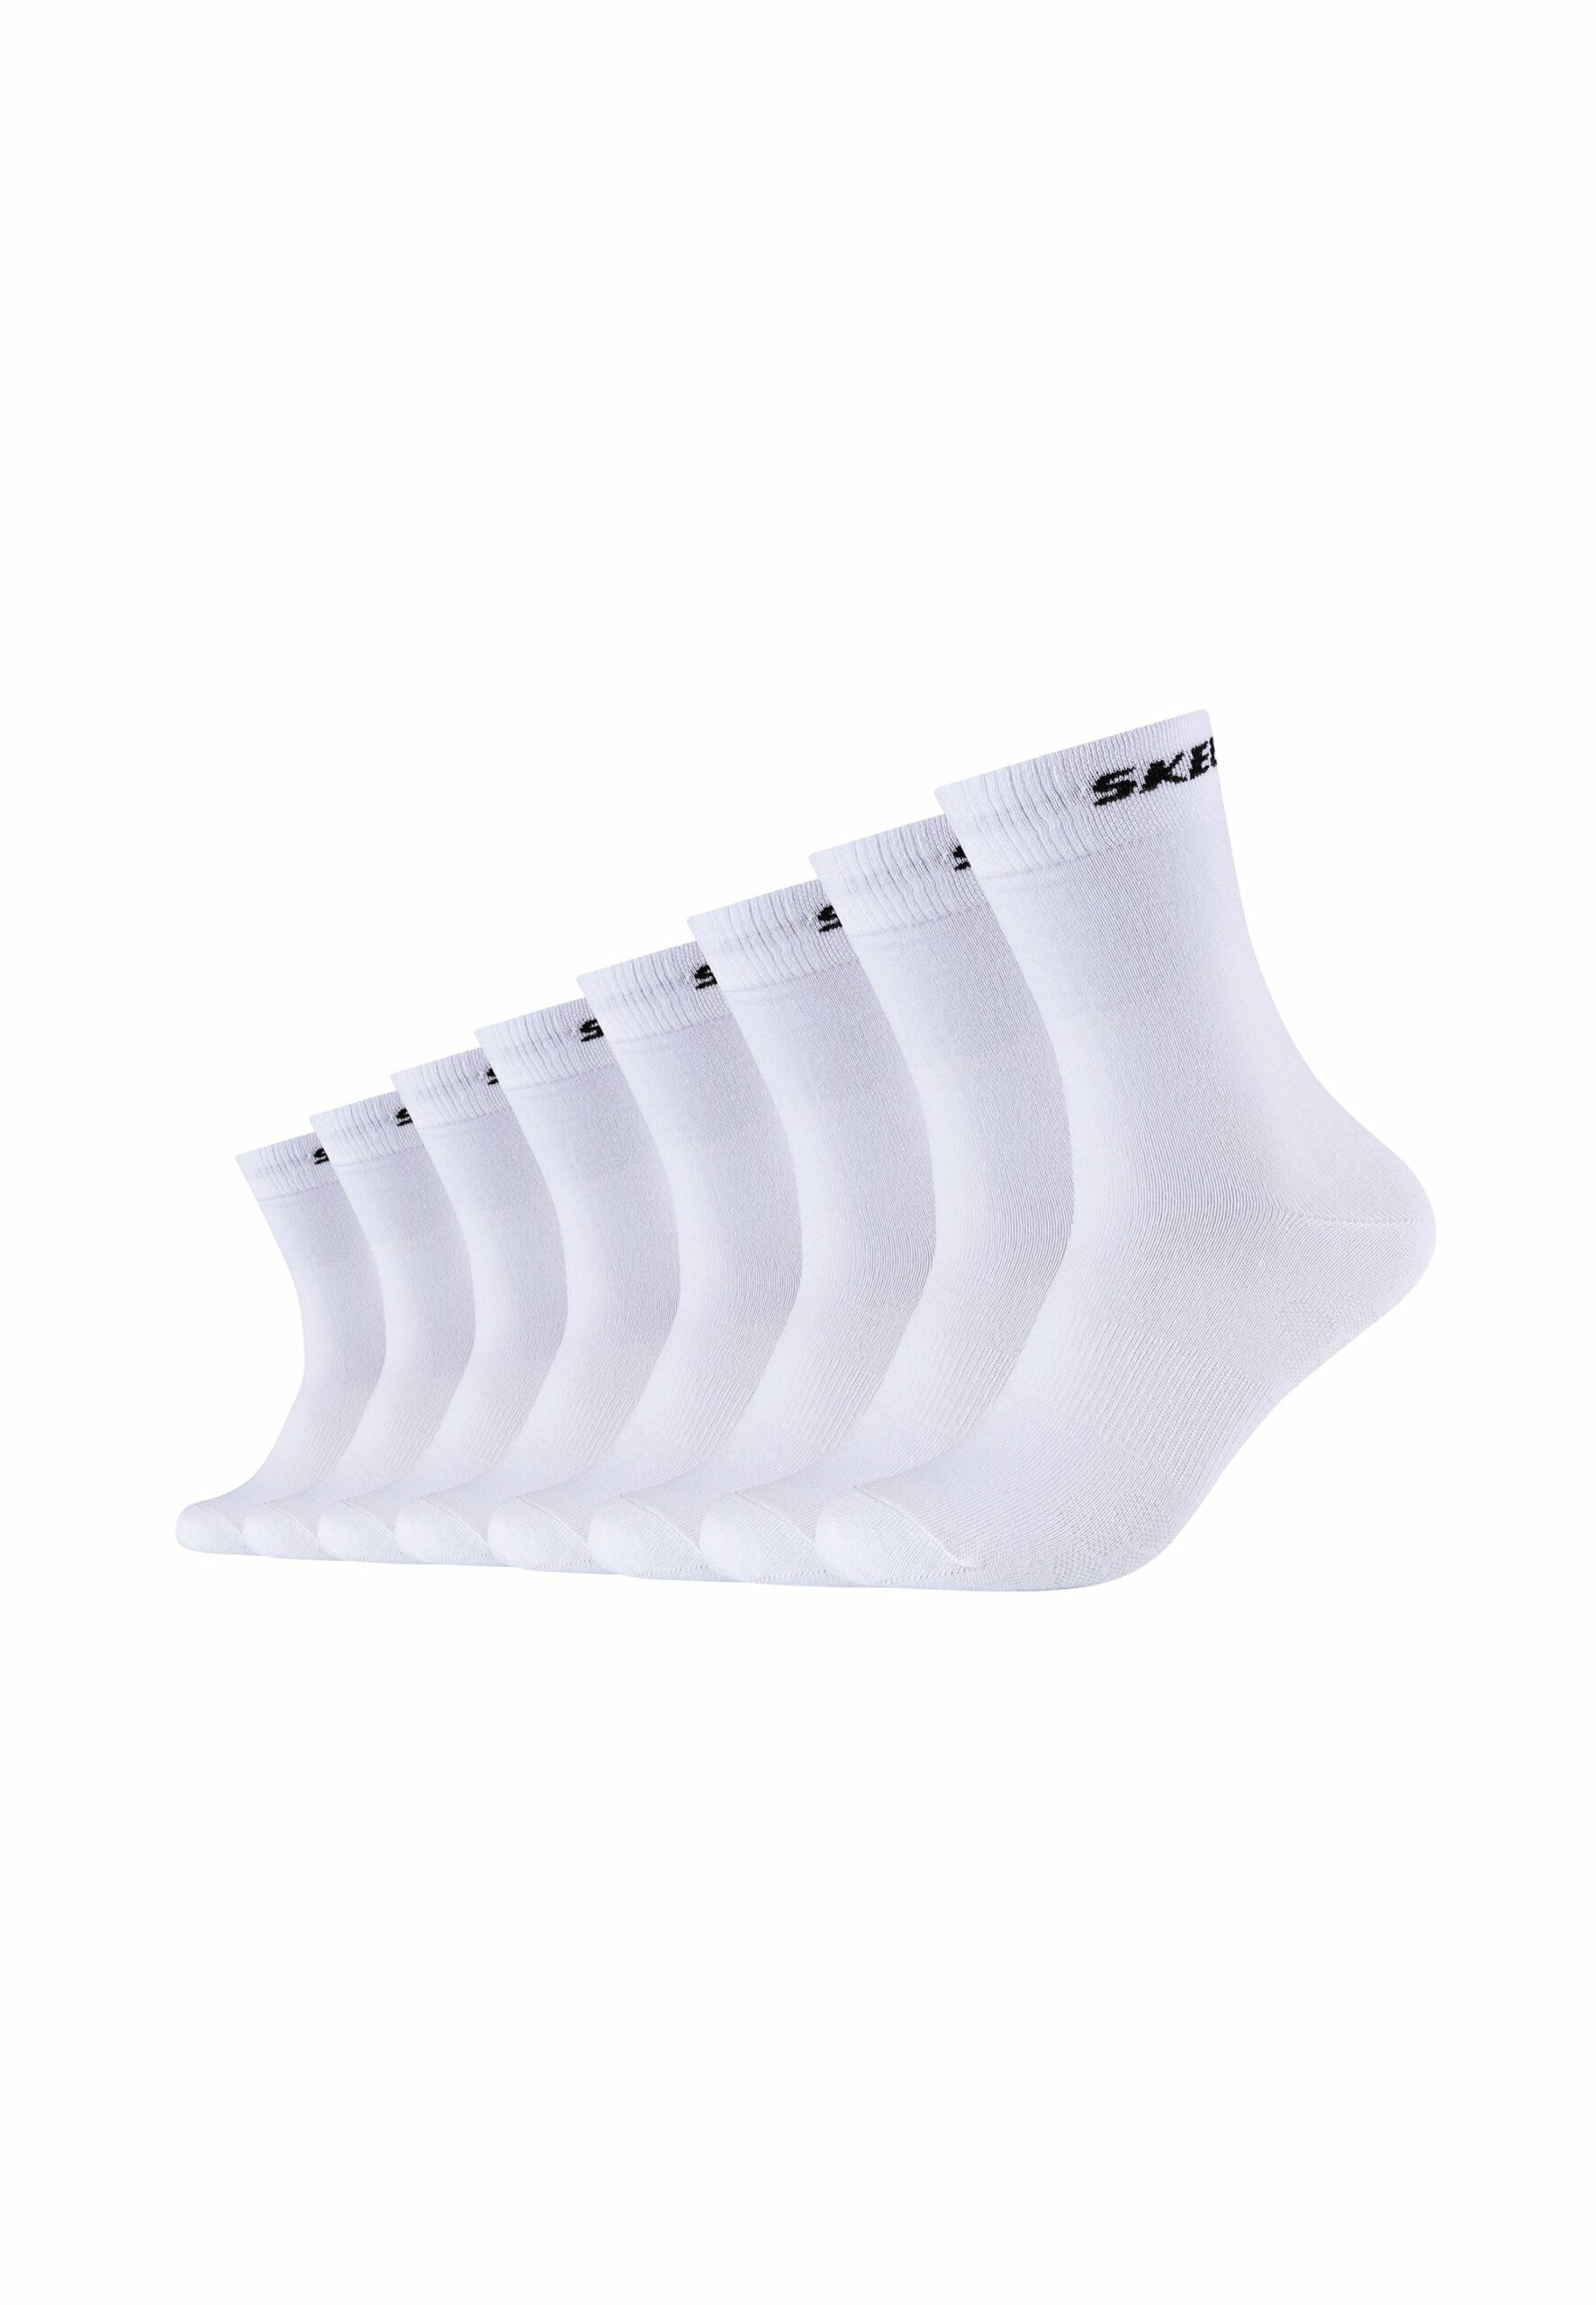 bei 8er organic Ventilation Skechers Socken Mesh kaufen white Pack